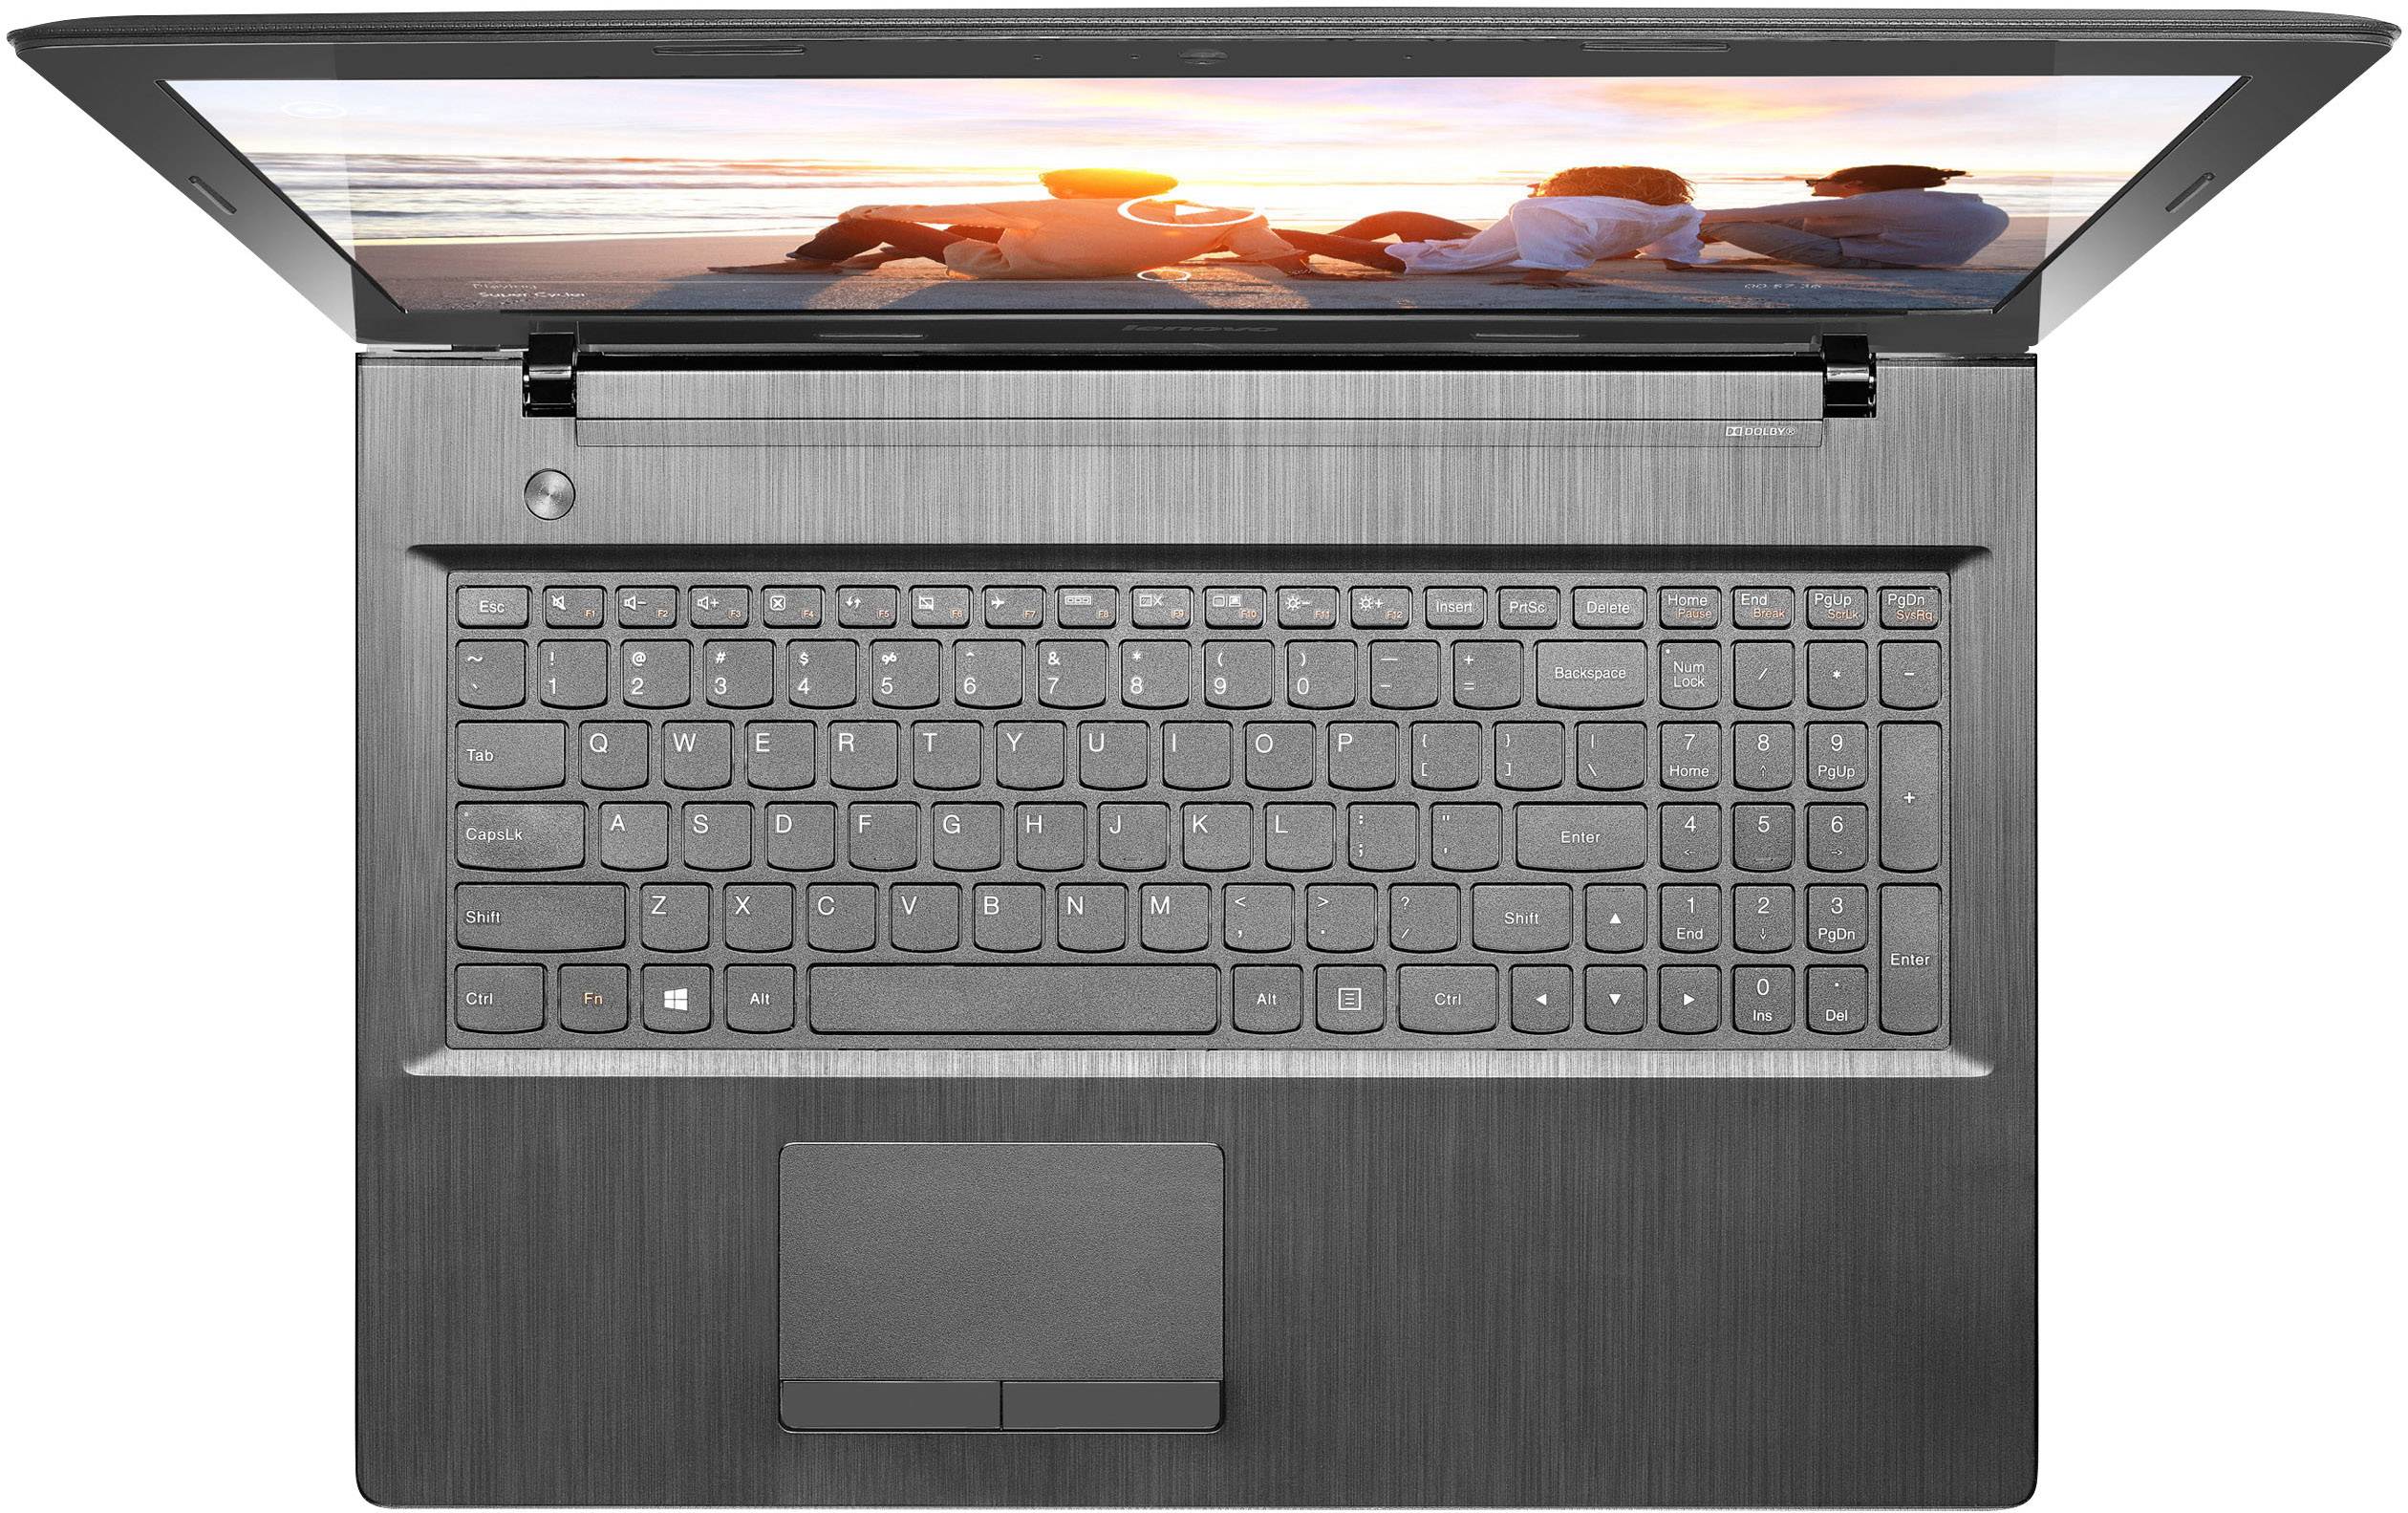 Lenovo Laptop 43.9 cm (17.3 inch) WXGA+ AMD A4 A4-6210 8 GB RAM 